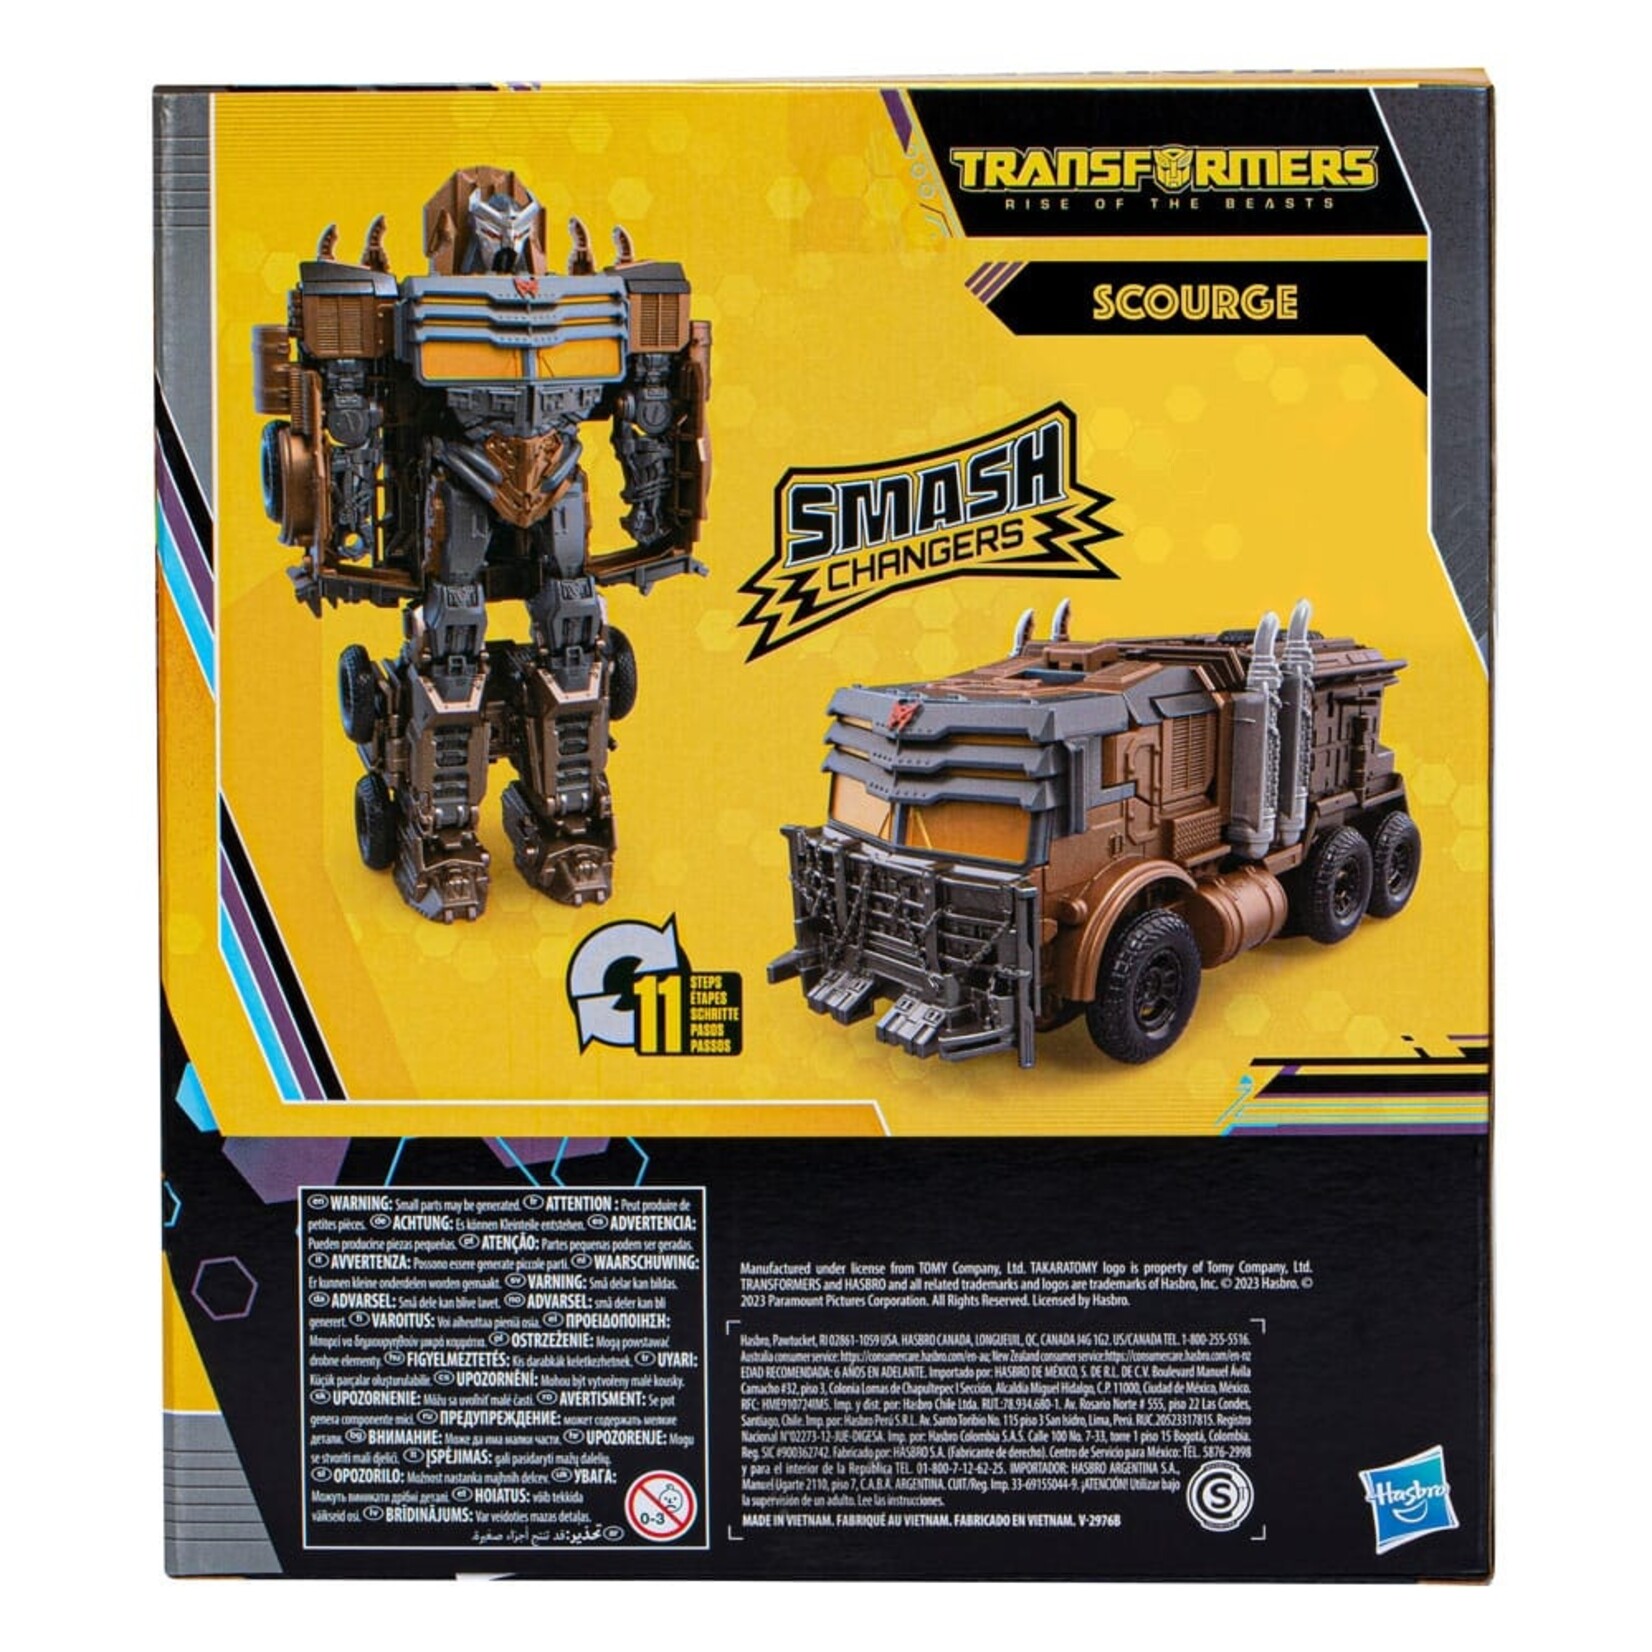 Hasbro Hasbro Transformers Rise of the Beasts Buzzworthy Bumblebee Smash Changers Action Figure Scourge 23 cm